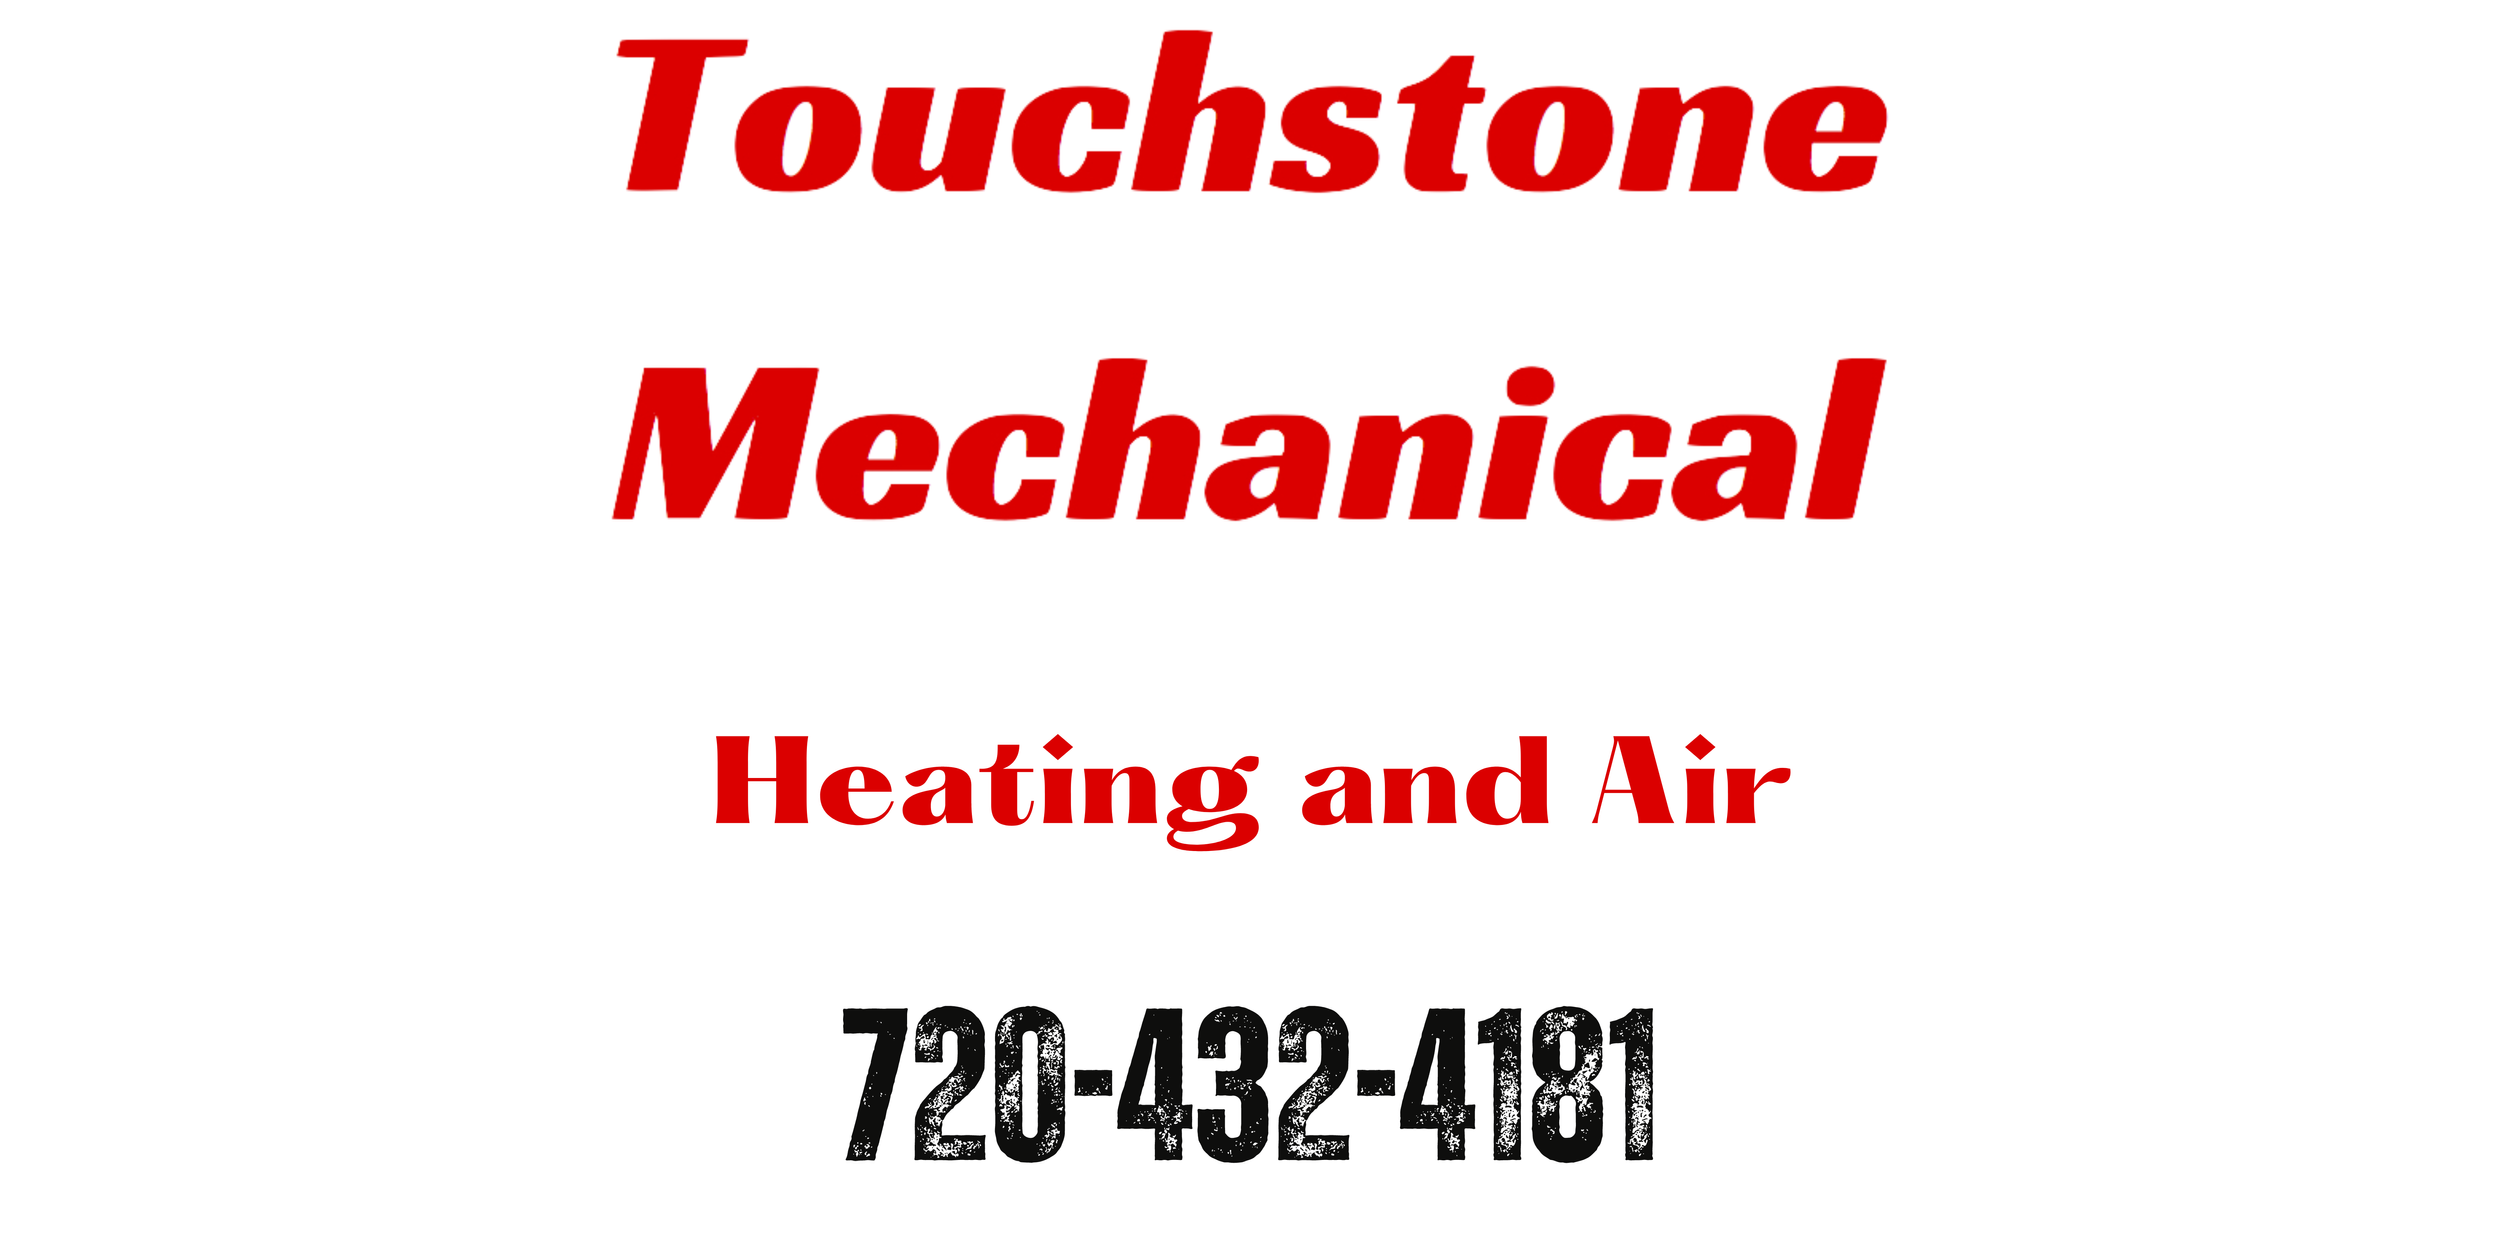 Touchstone Mechanical